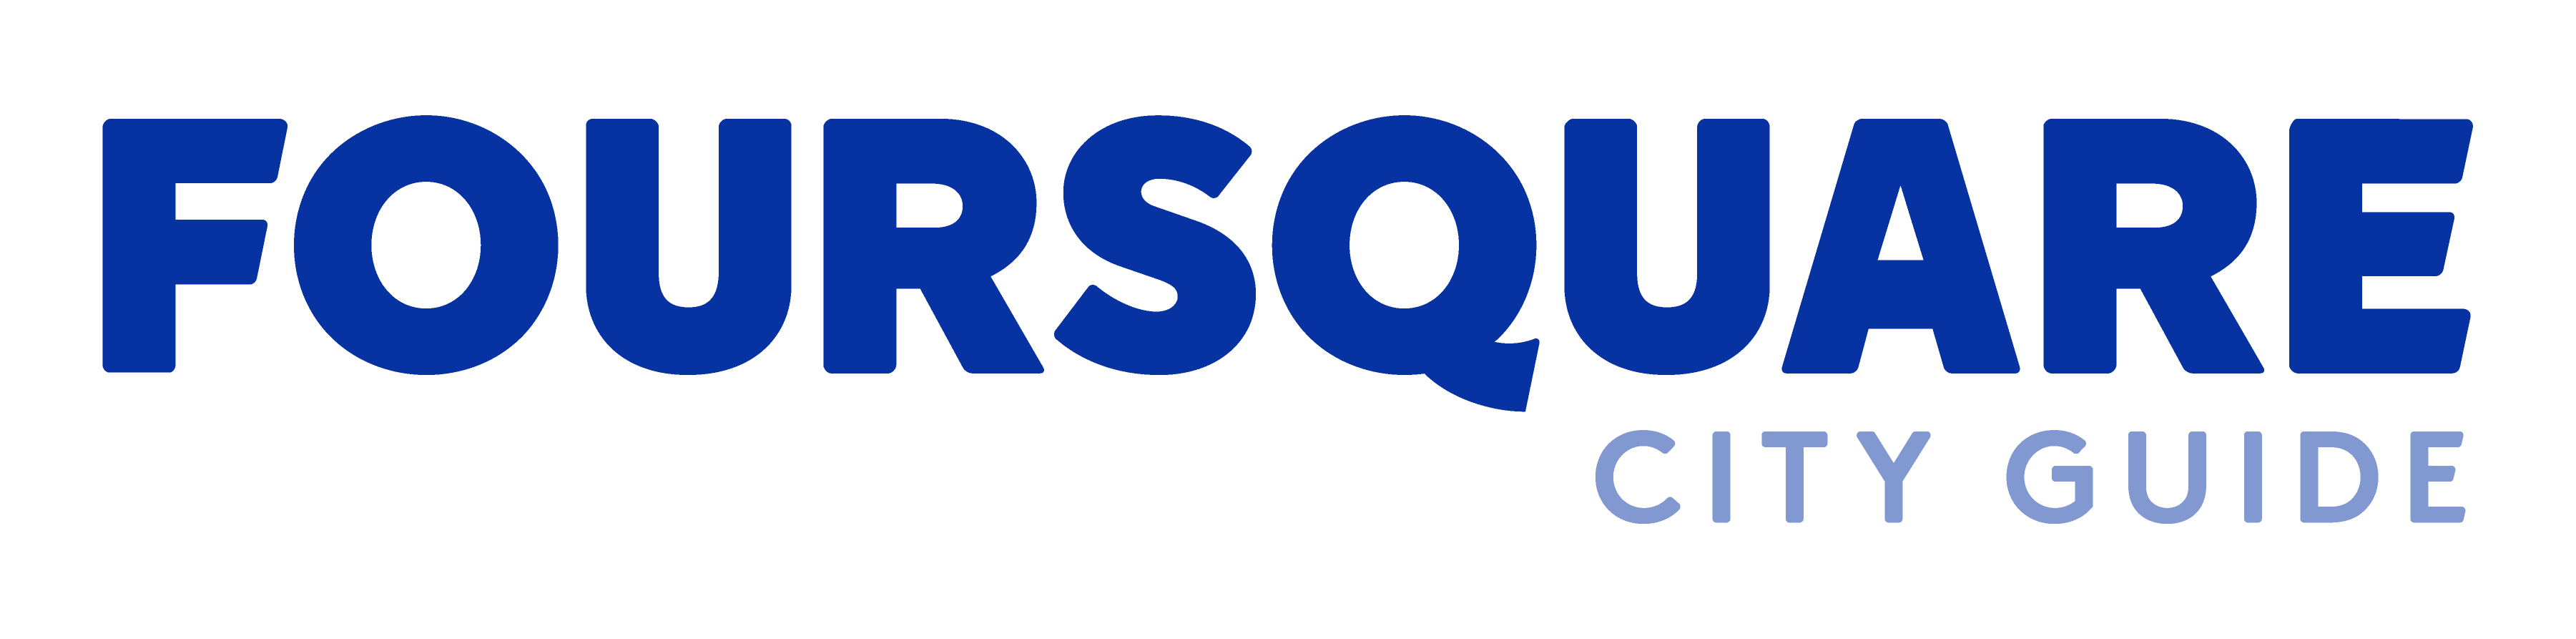 Foursquare logo colors